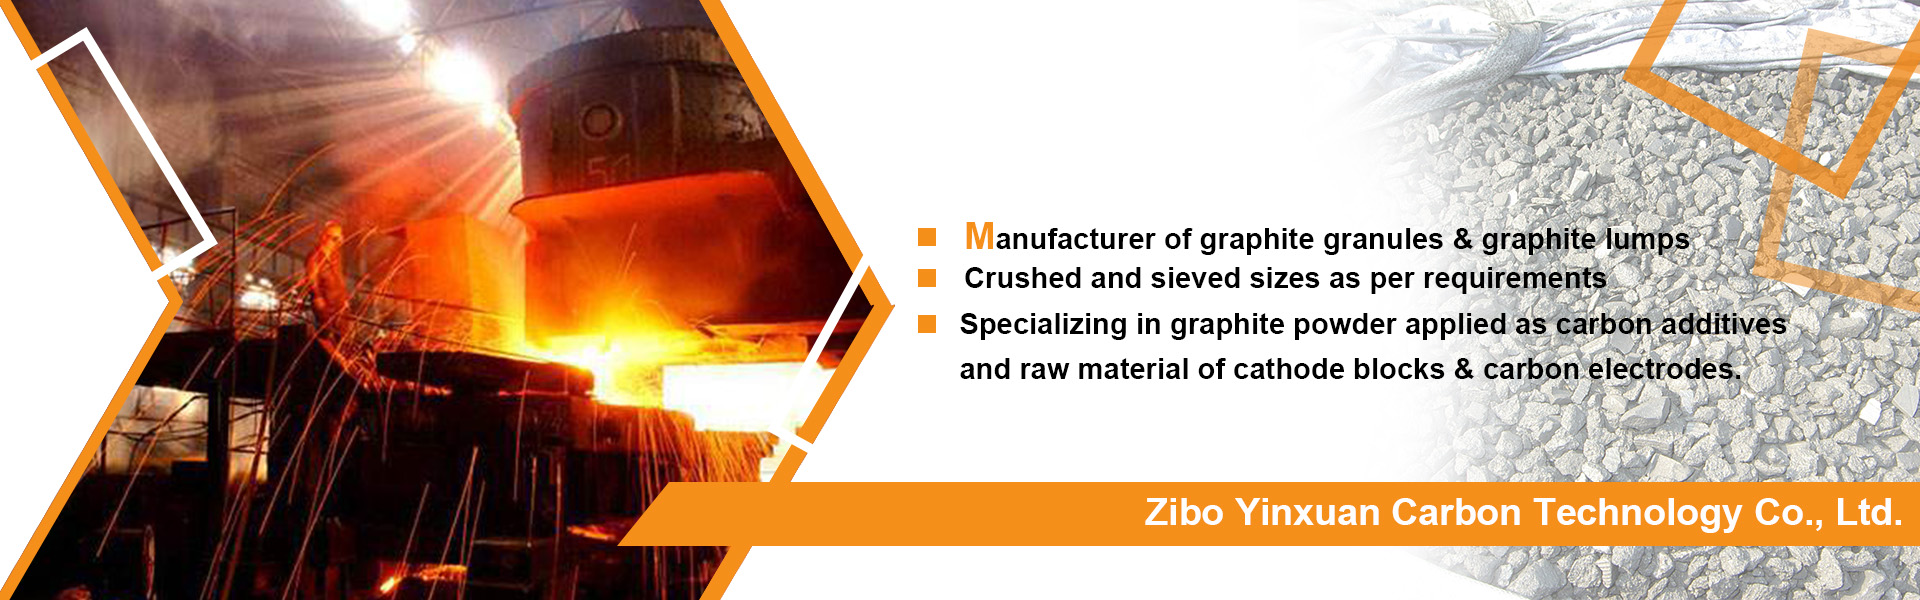 graphite,graphite parts,graphite granules,Zibo Yinxuan Carbon Technology Co.,Ltd